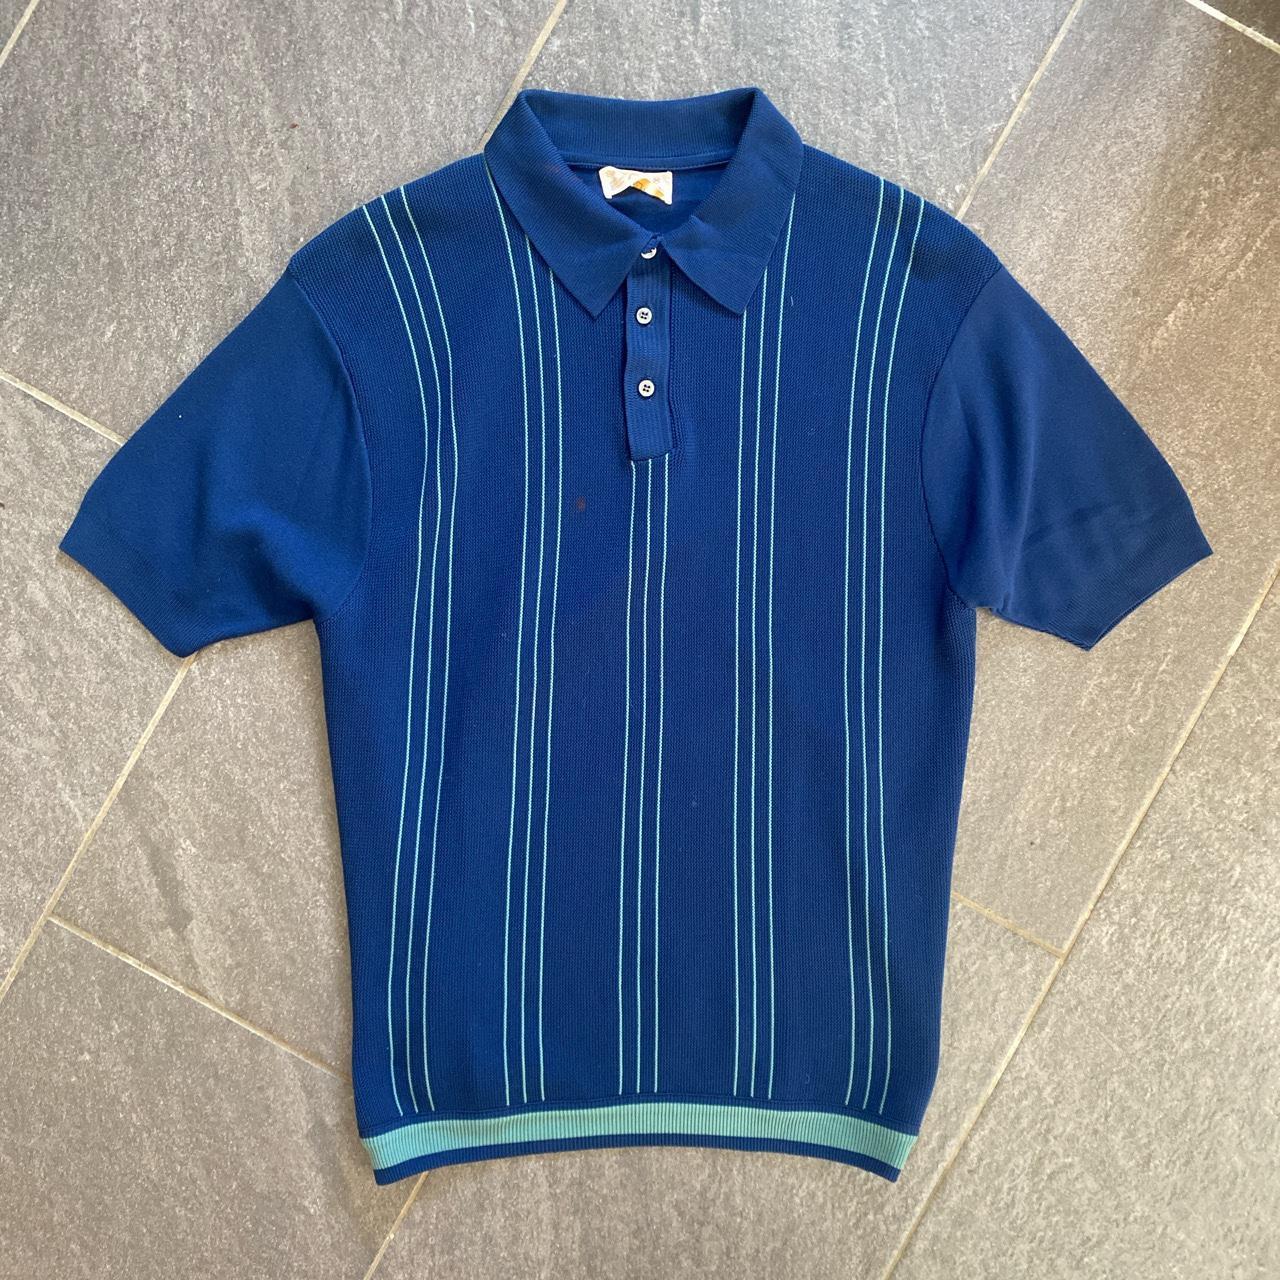 50s/60s knit shirt Chest 18’ Length 26’ - Depop